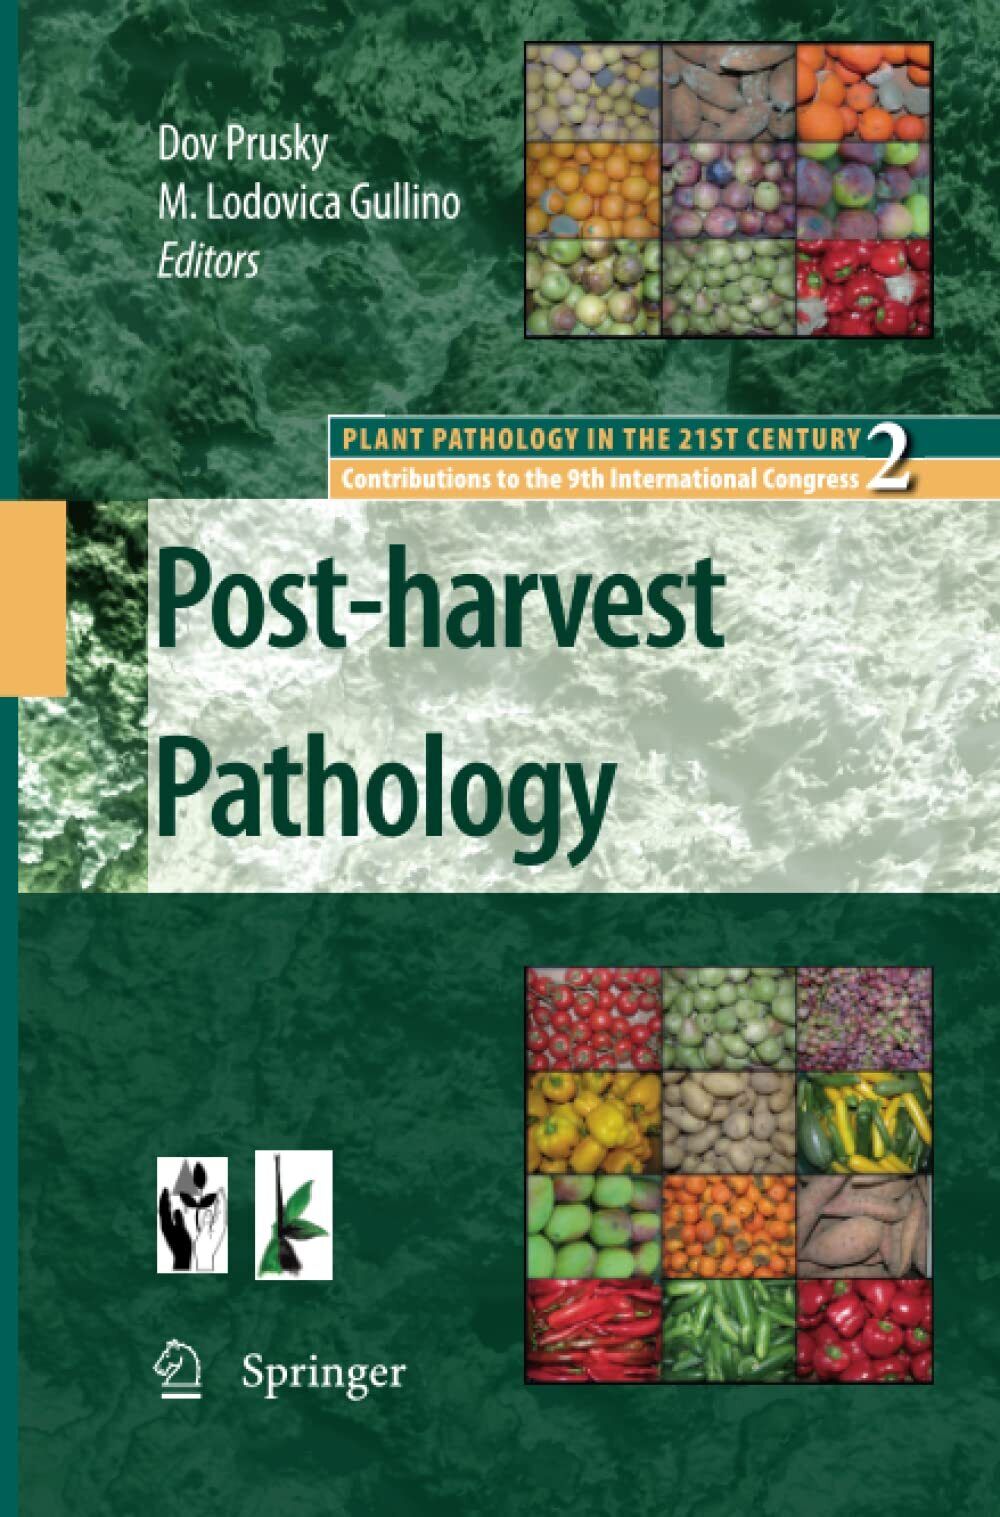 Post-harvest Pathology - Dov Prusky - Springer, 2012